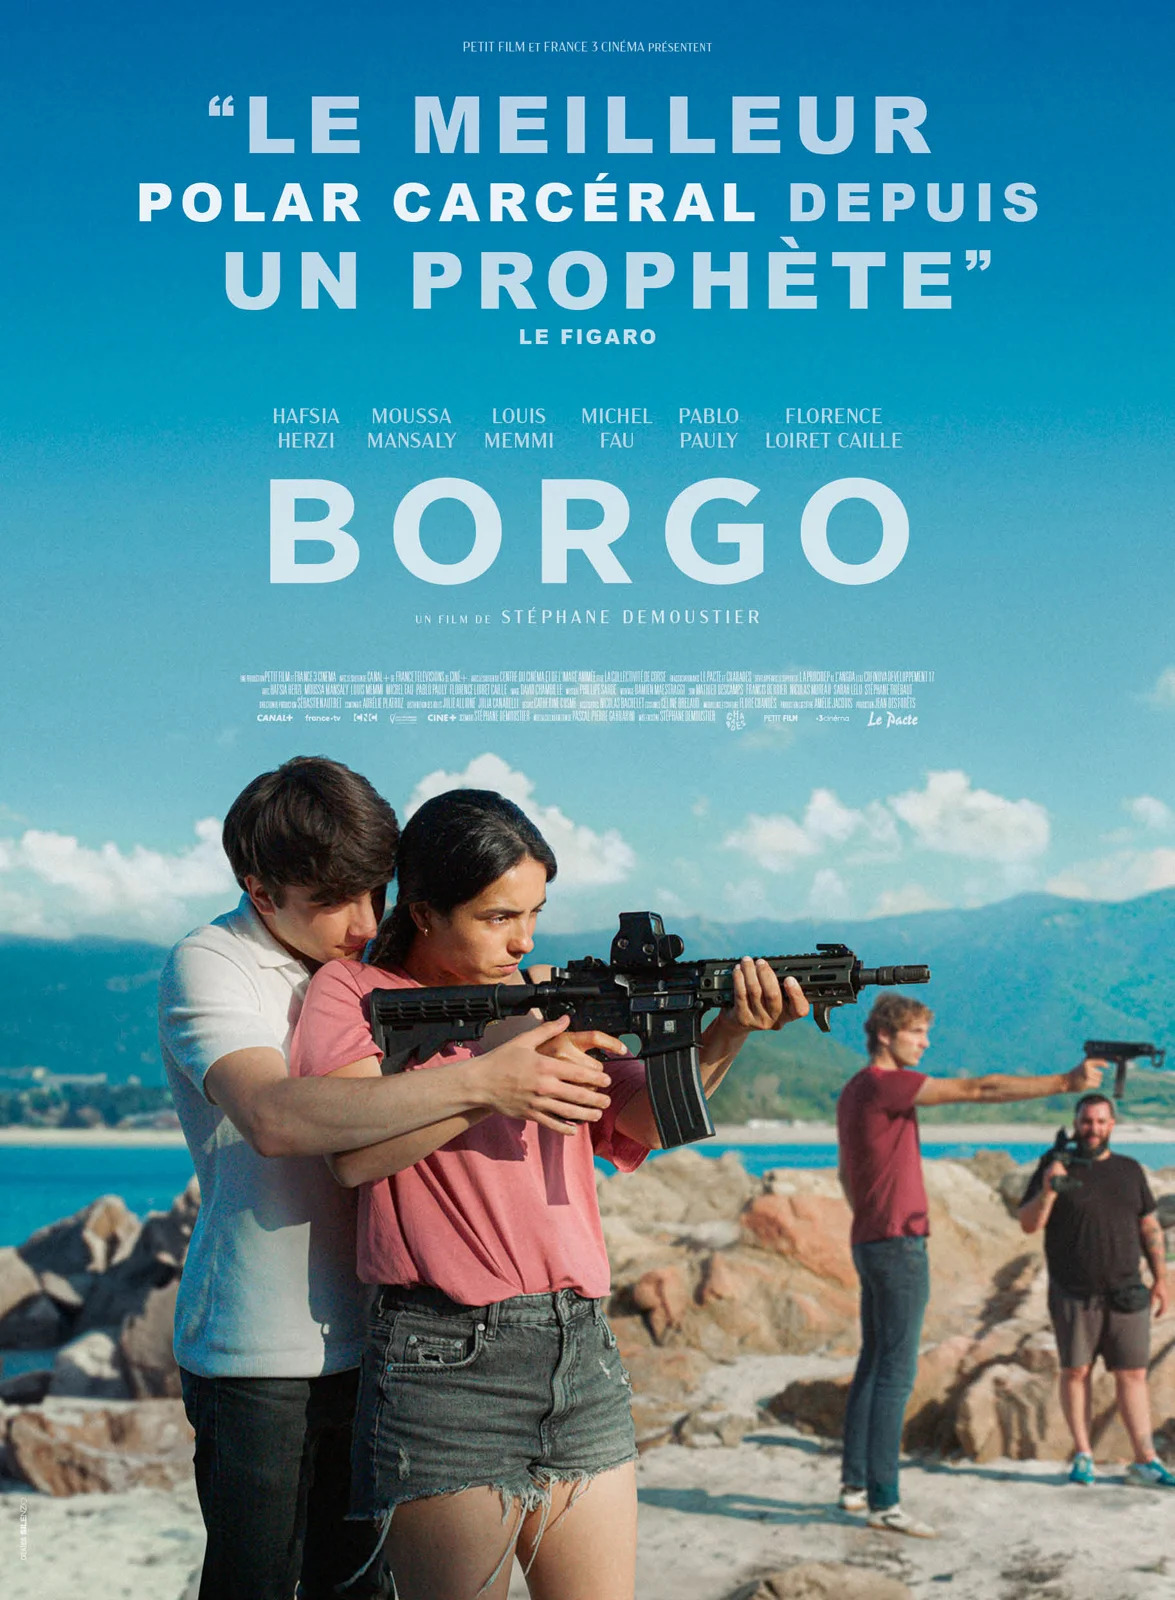 Alle leuke evenementen! : Projection cinéma du film Borgo